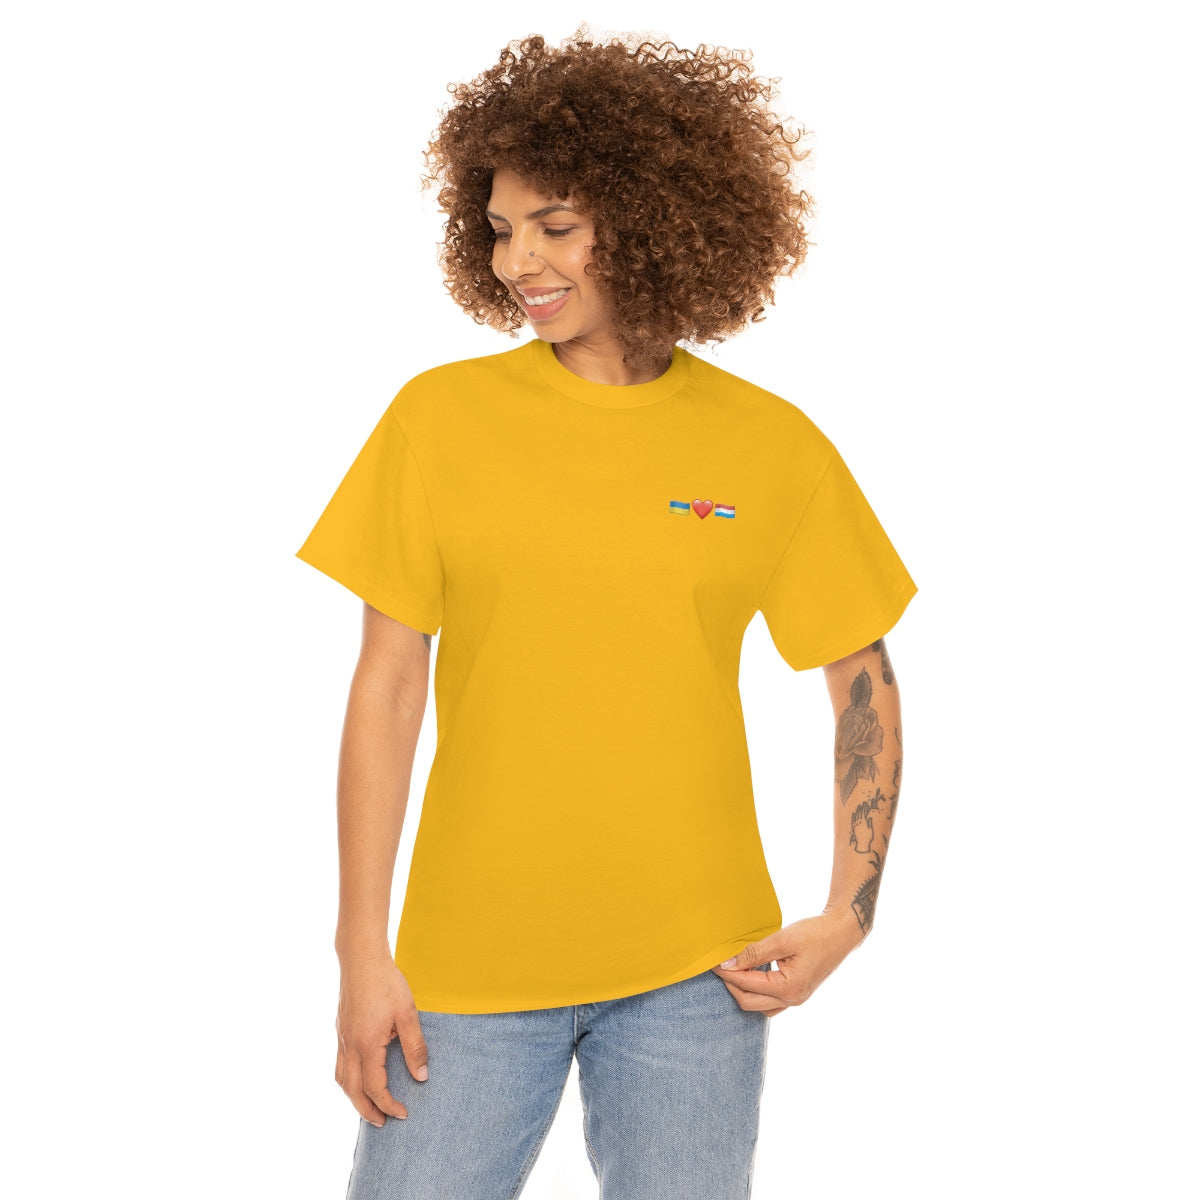 Luxemburgs Unterstützung - doppelseitiges Unisex-T-Shirt